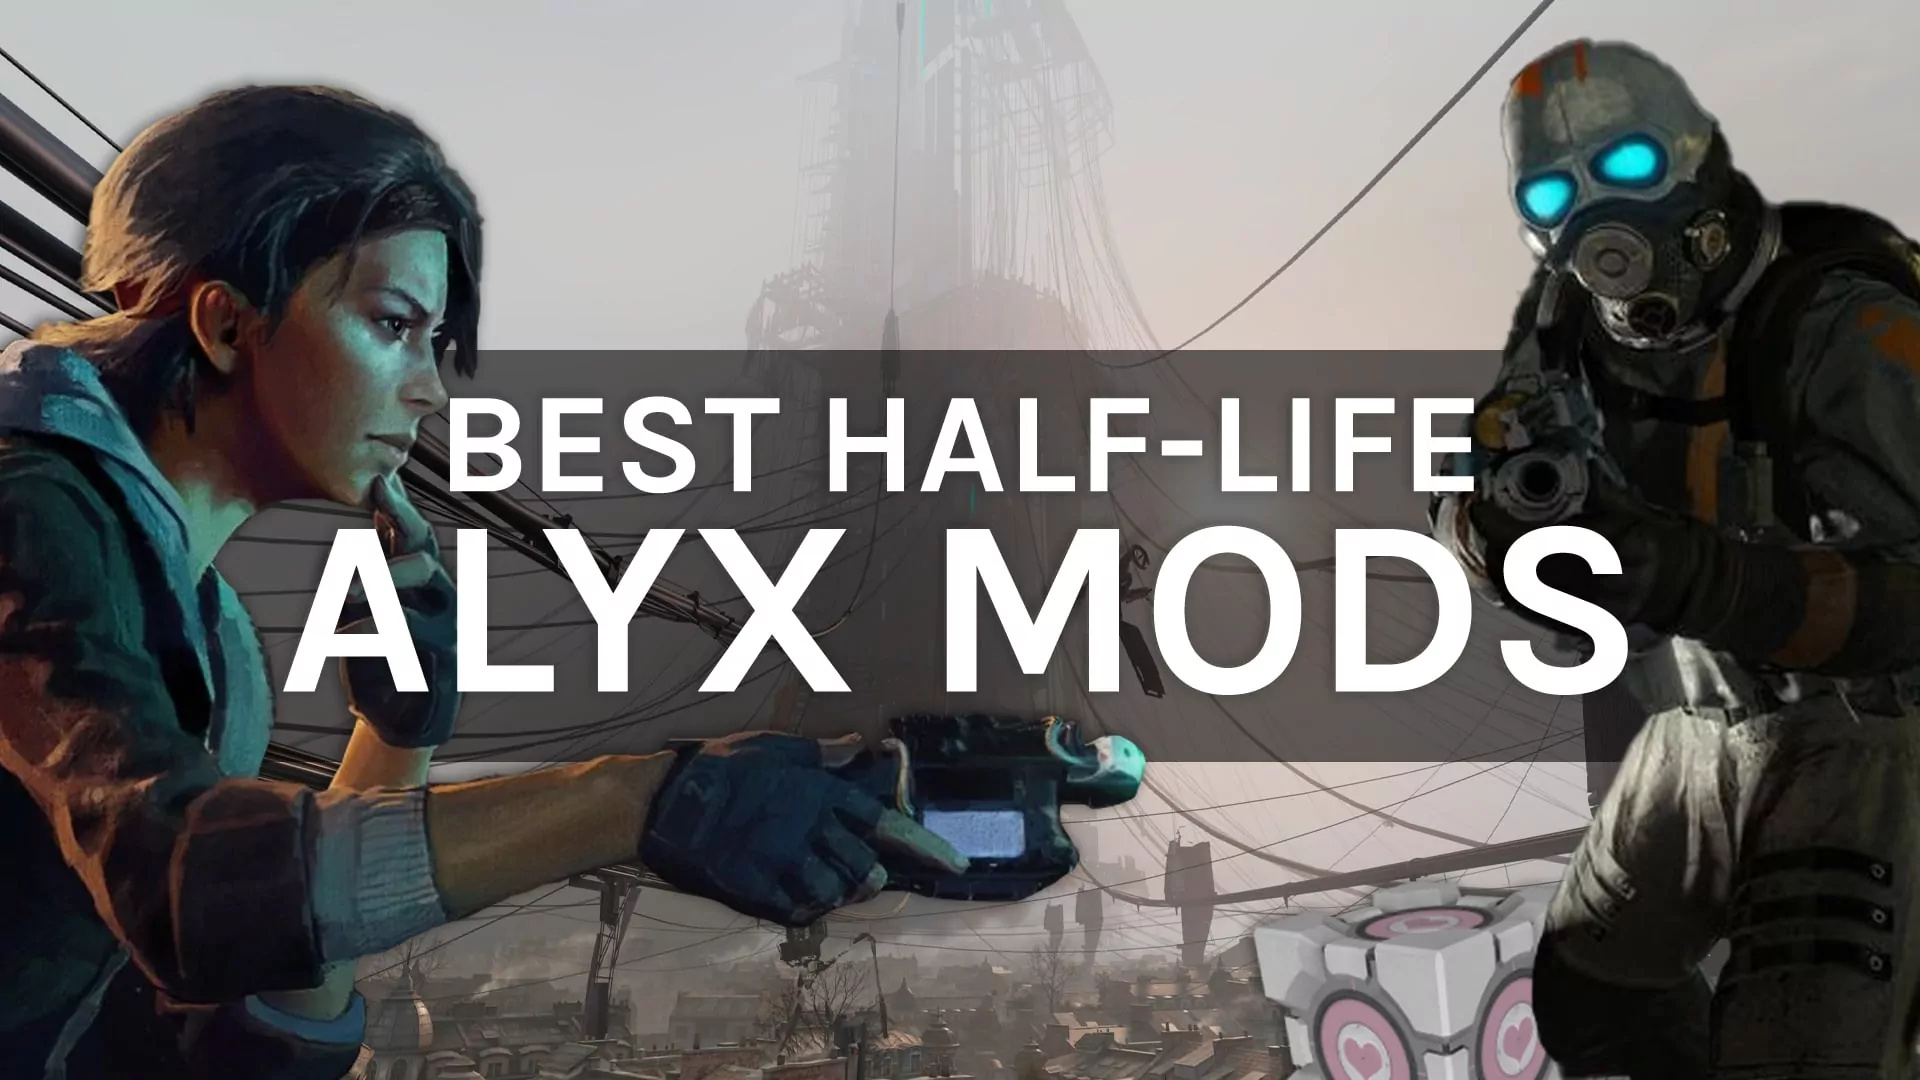 Half-Life Alyx Mods